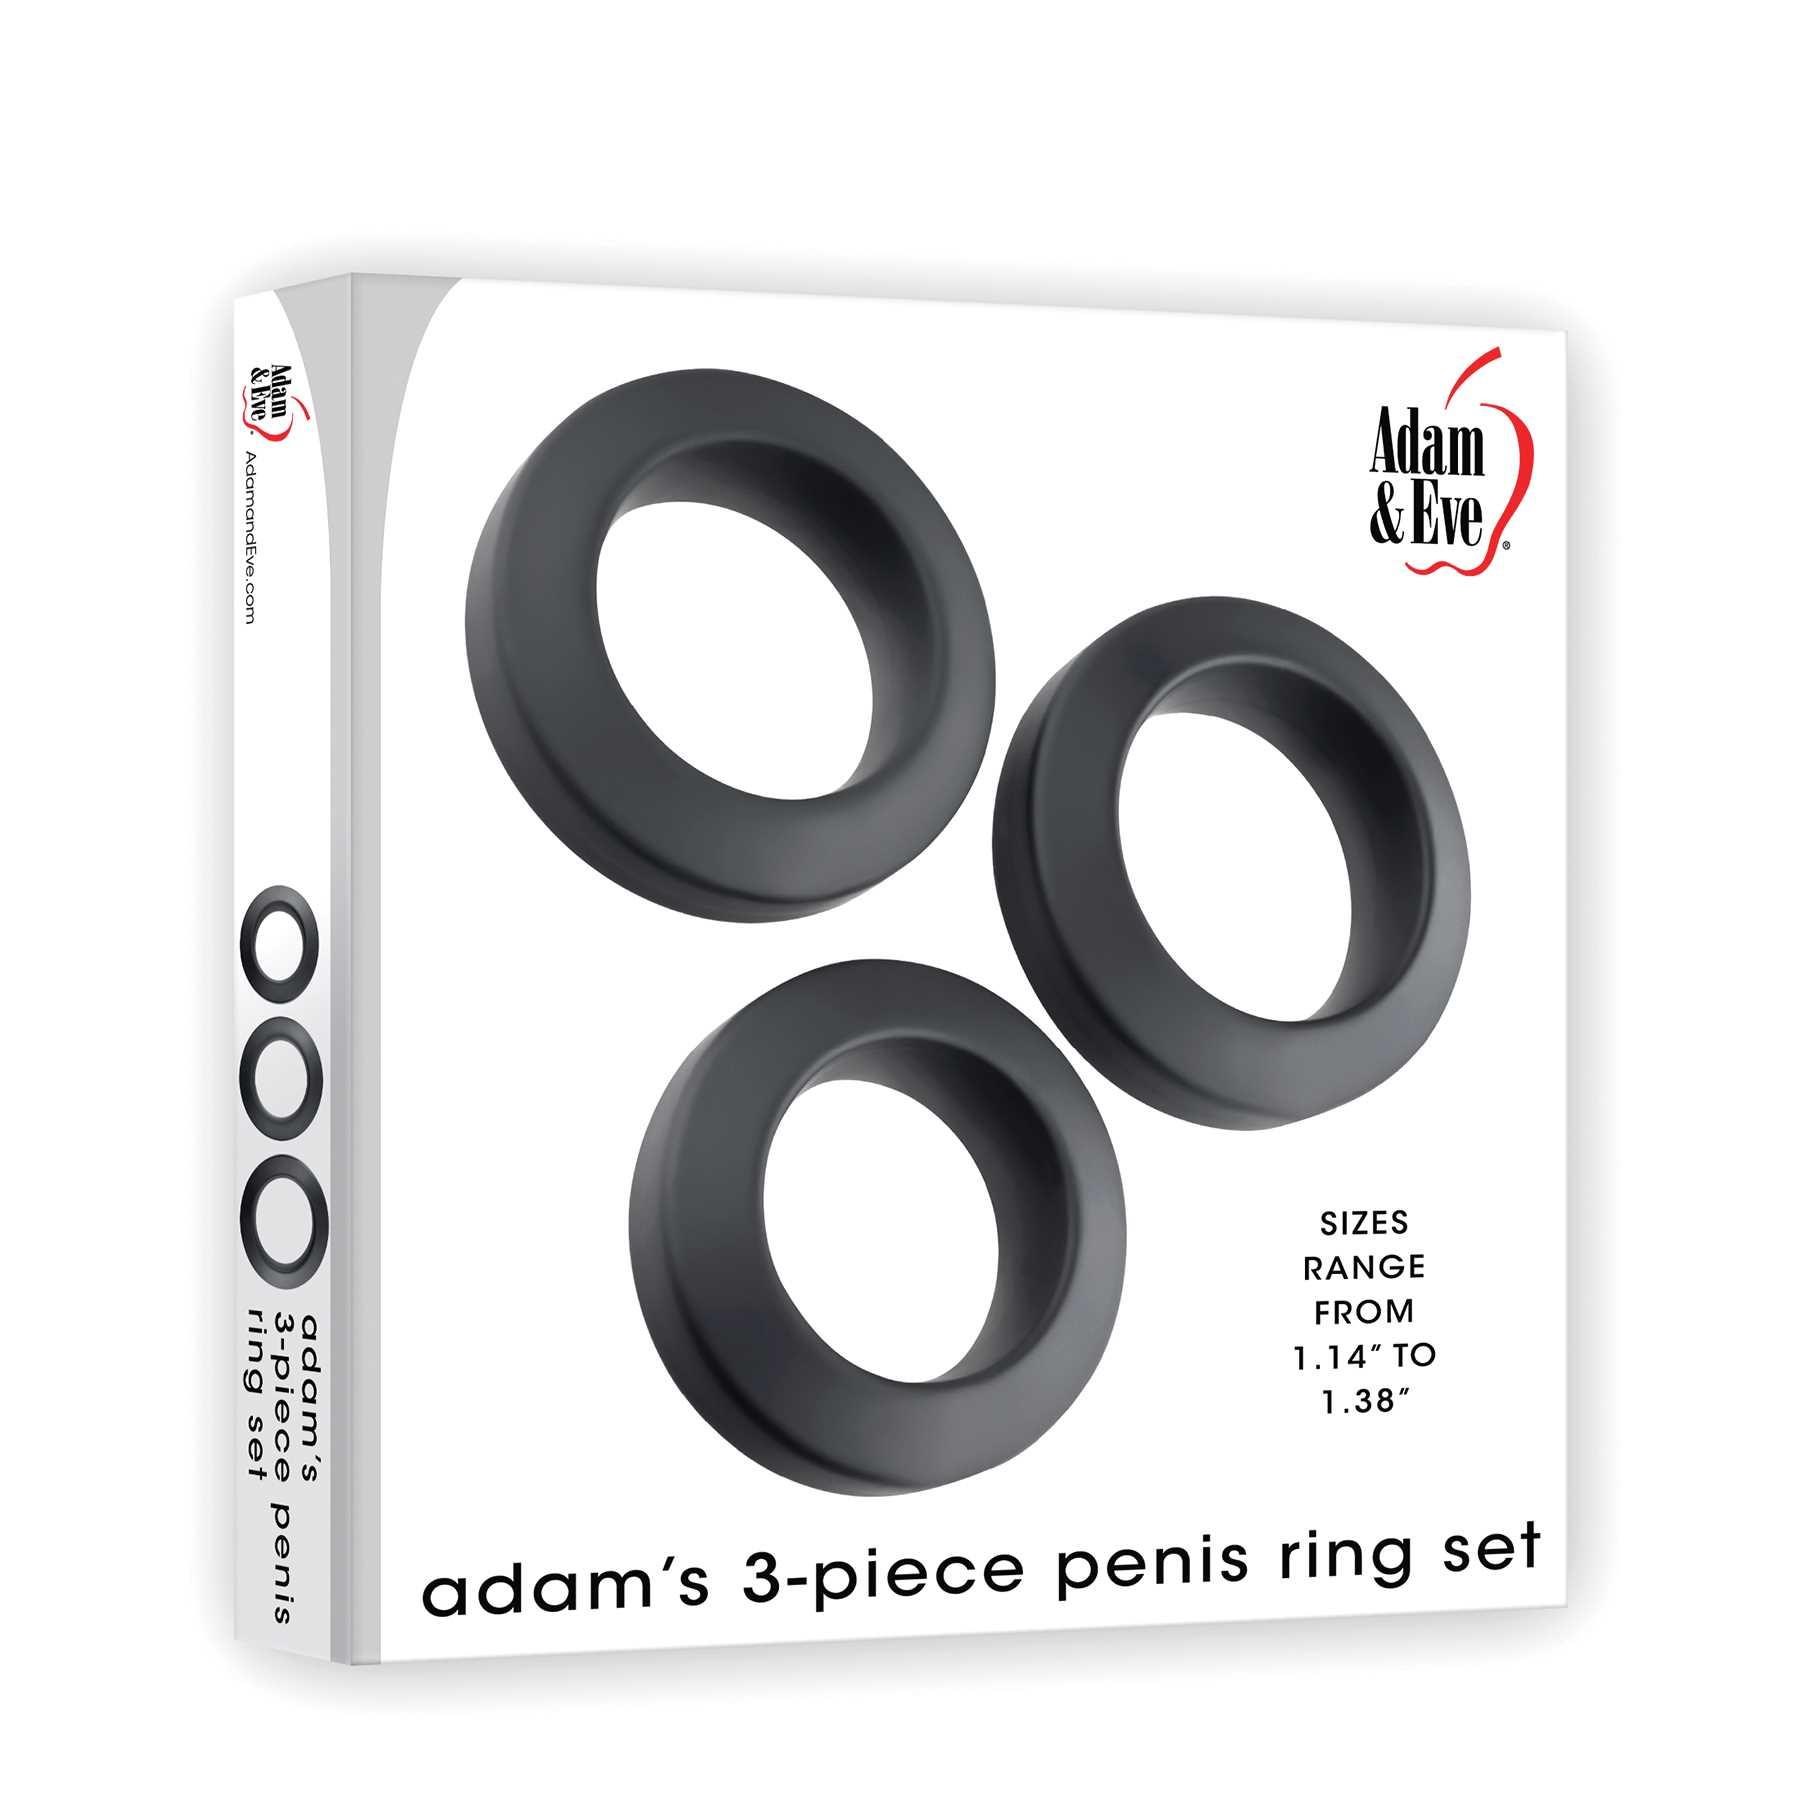 Adam's 3-Piece Penis Ring Set box packaging